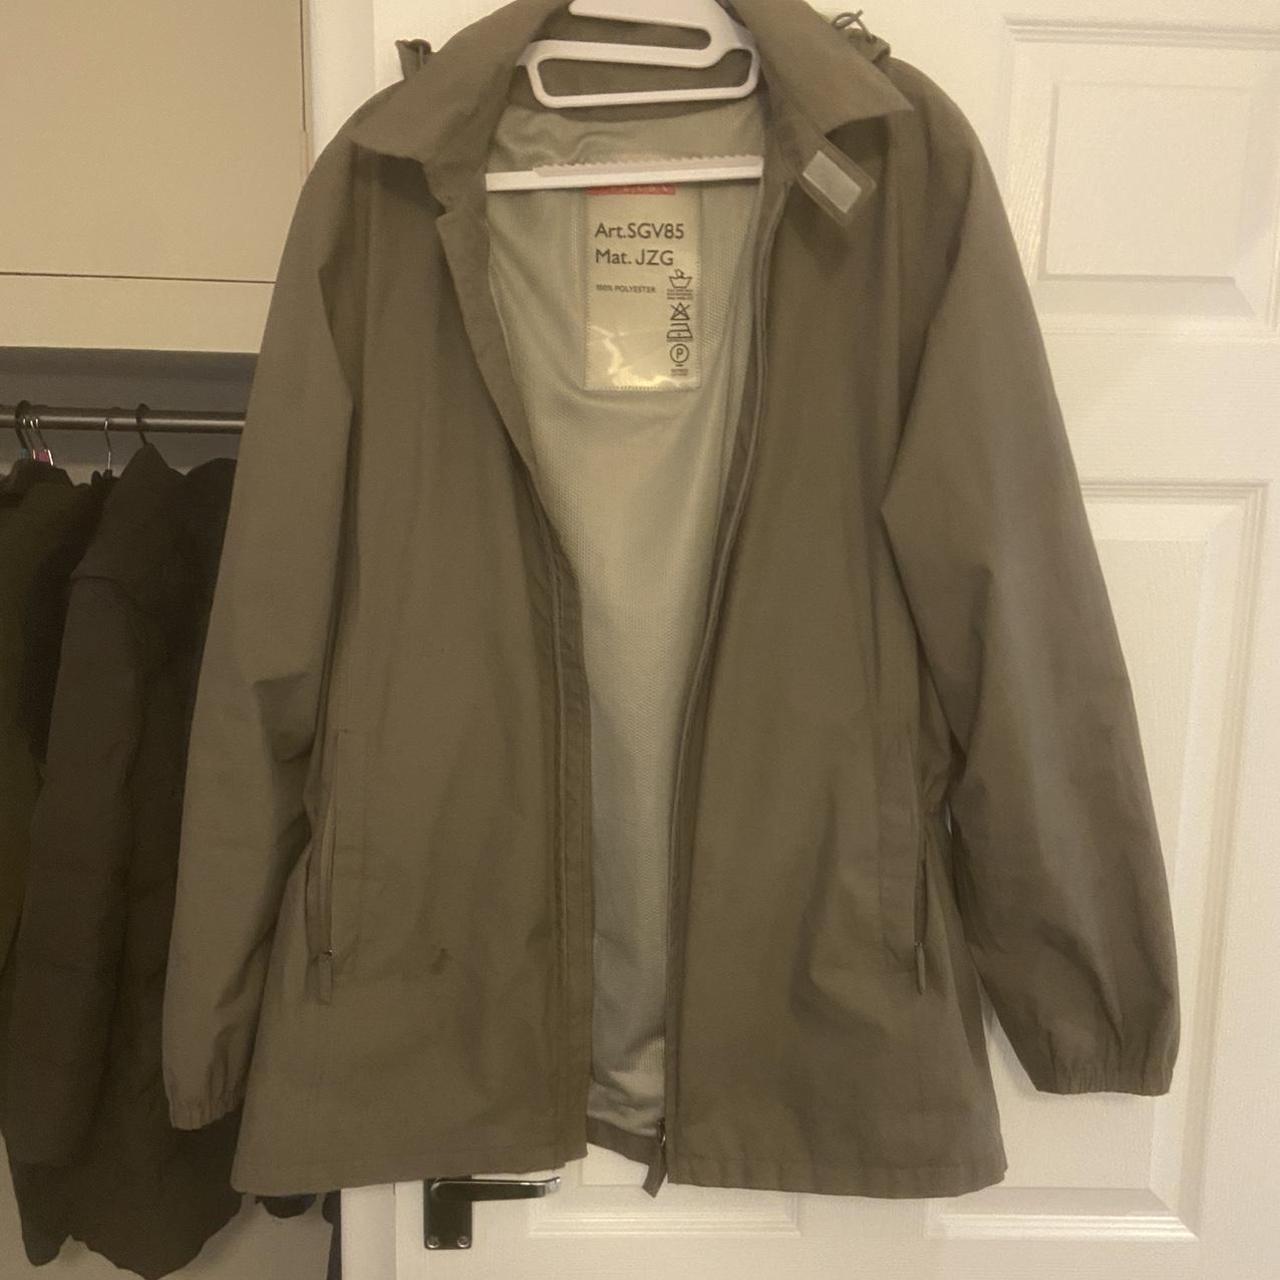 Prada art-sgv85 rain jacket. , 10/10 condition. No